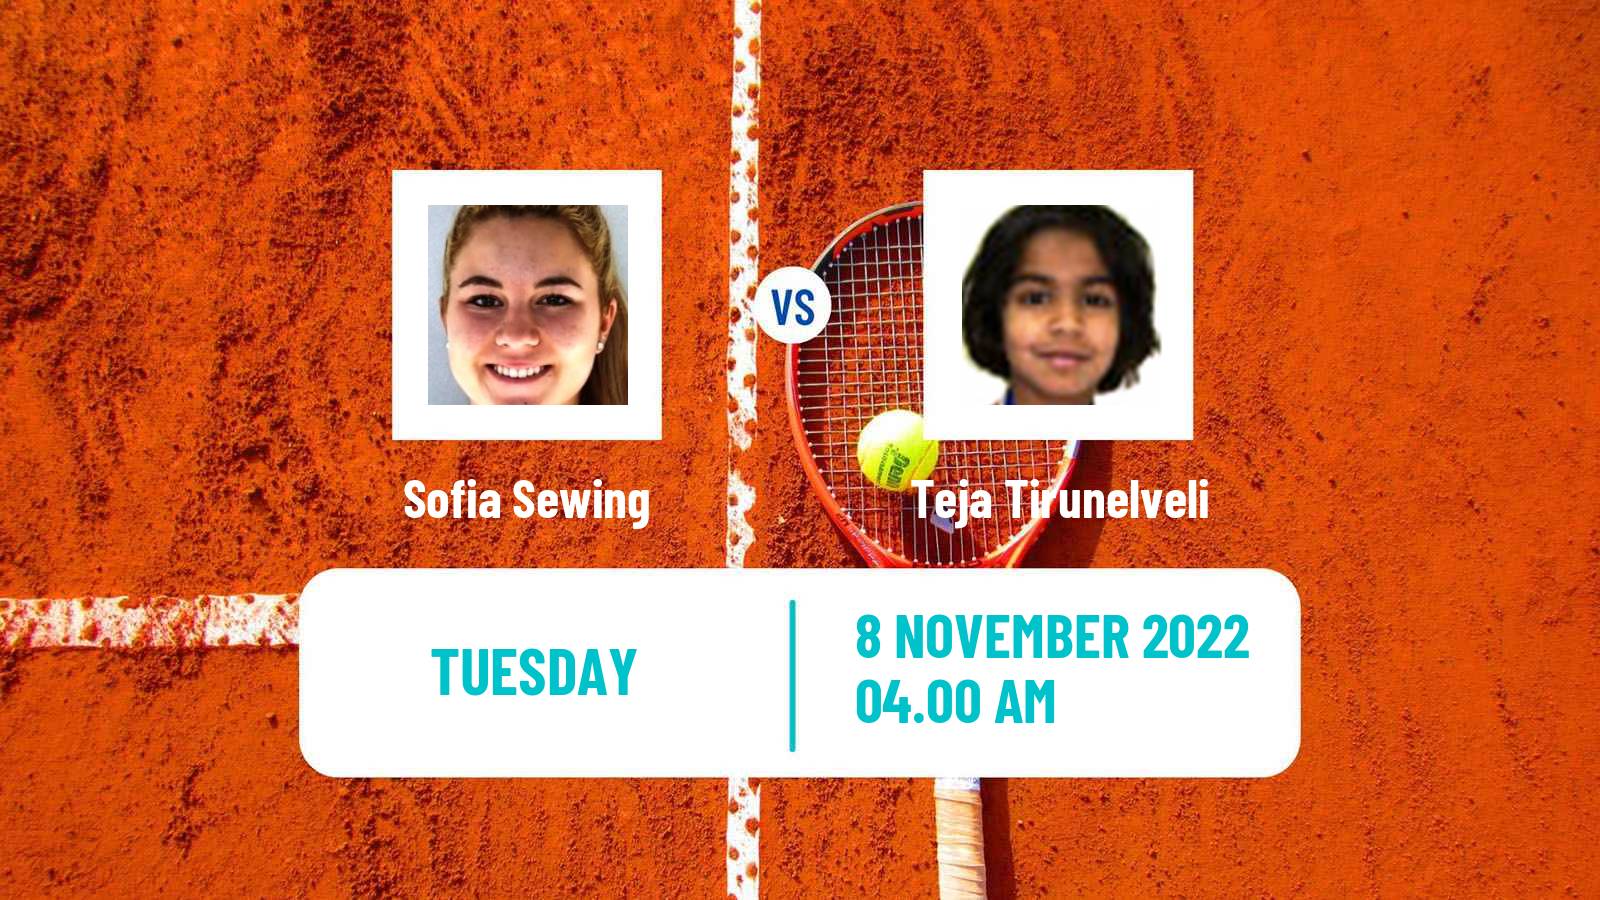 Tennis ITF Tournaments Sofia Sewing - Teja Tirunelveli